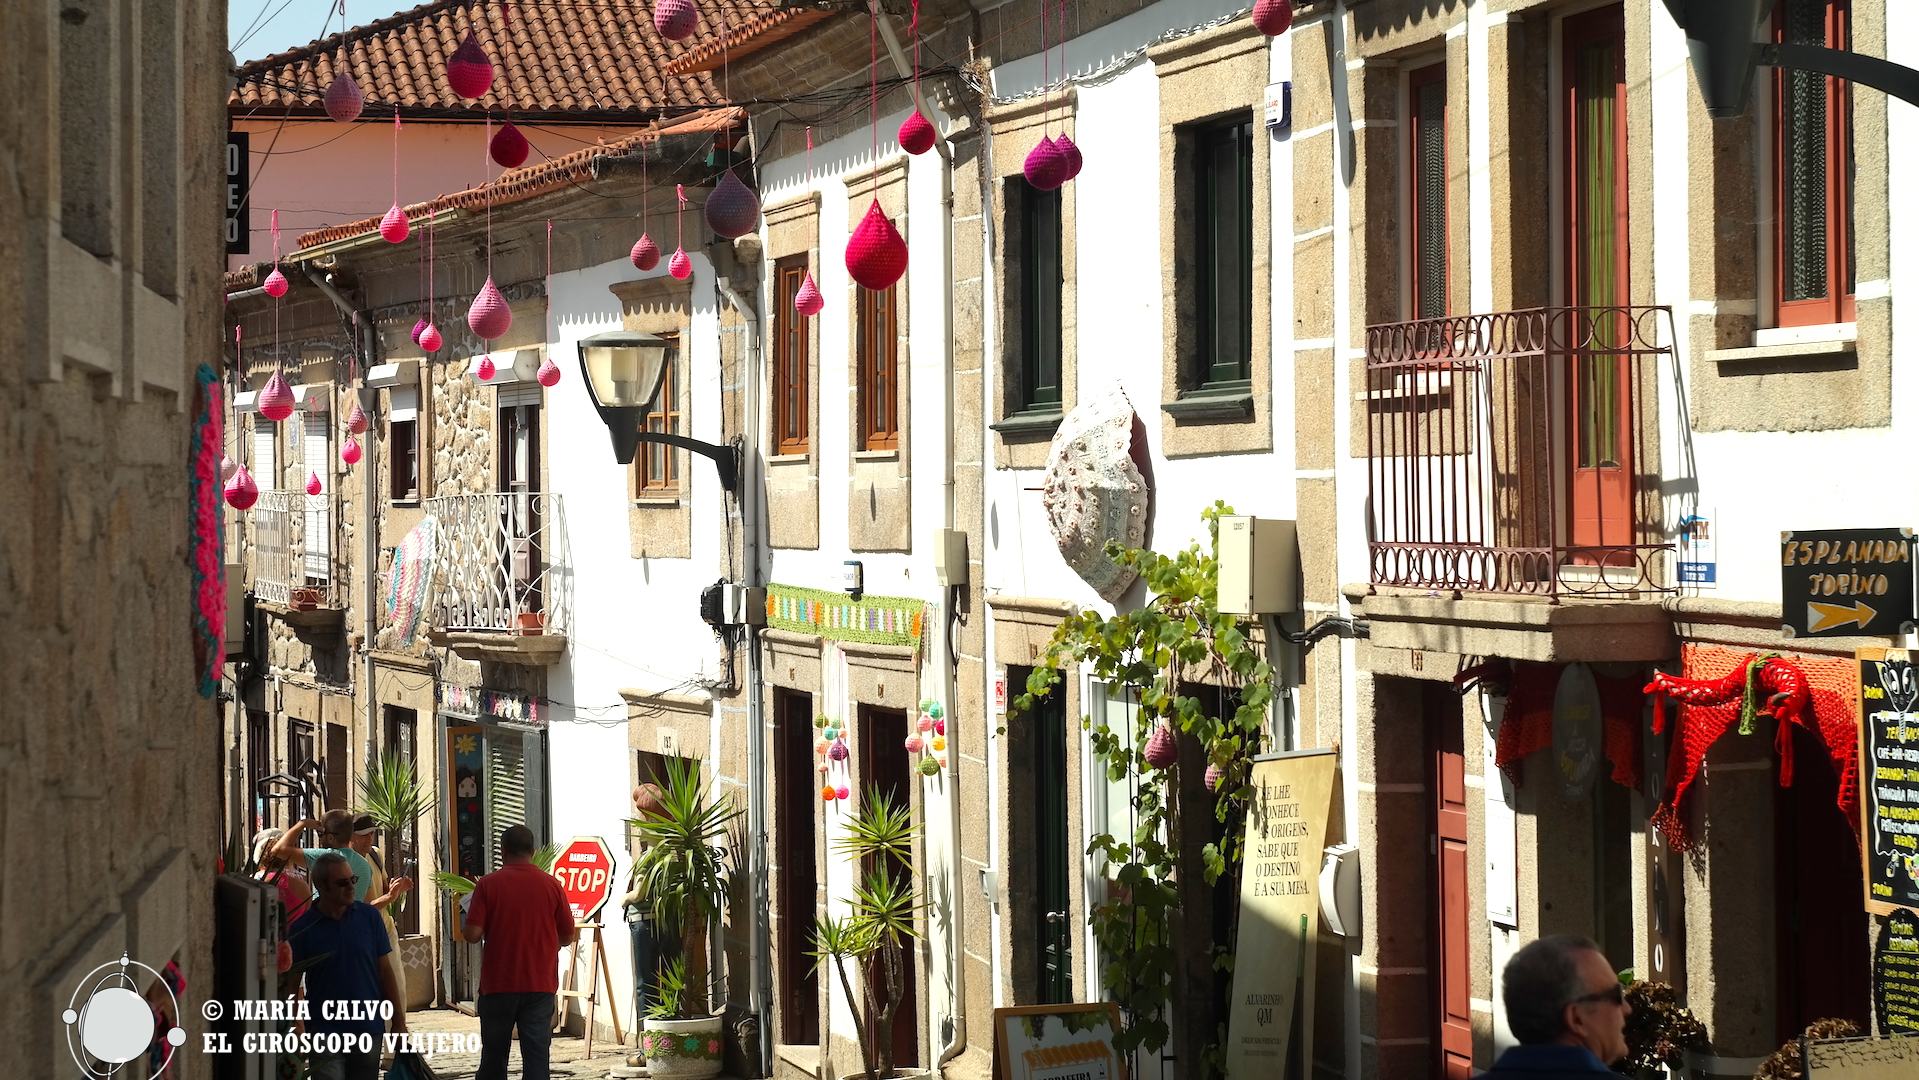 Las calles de Vilanova de Cerveira engalanadas en el evento "O Crochet sai á rua"